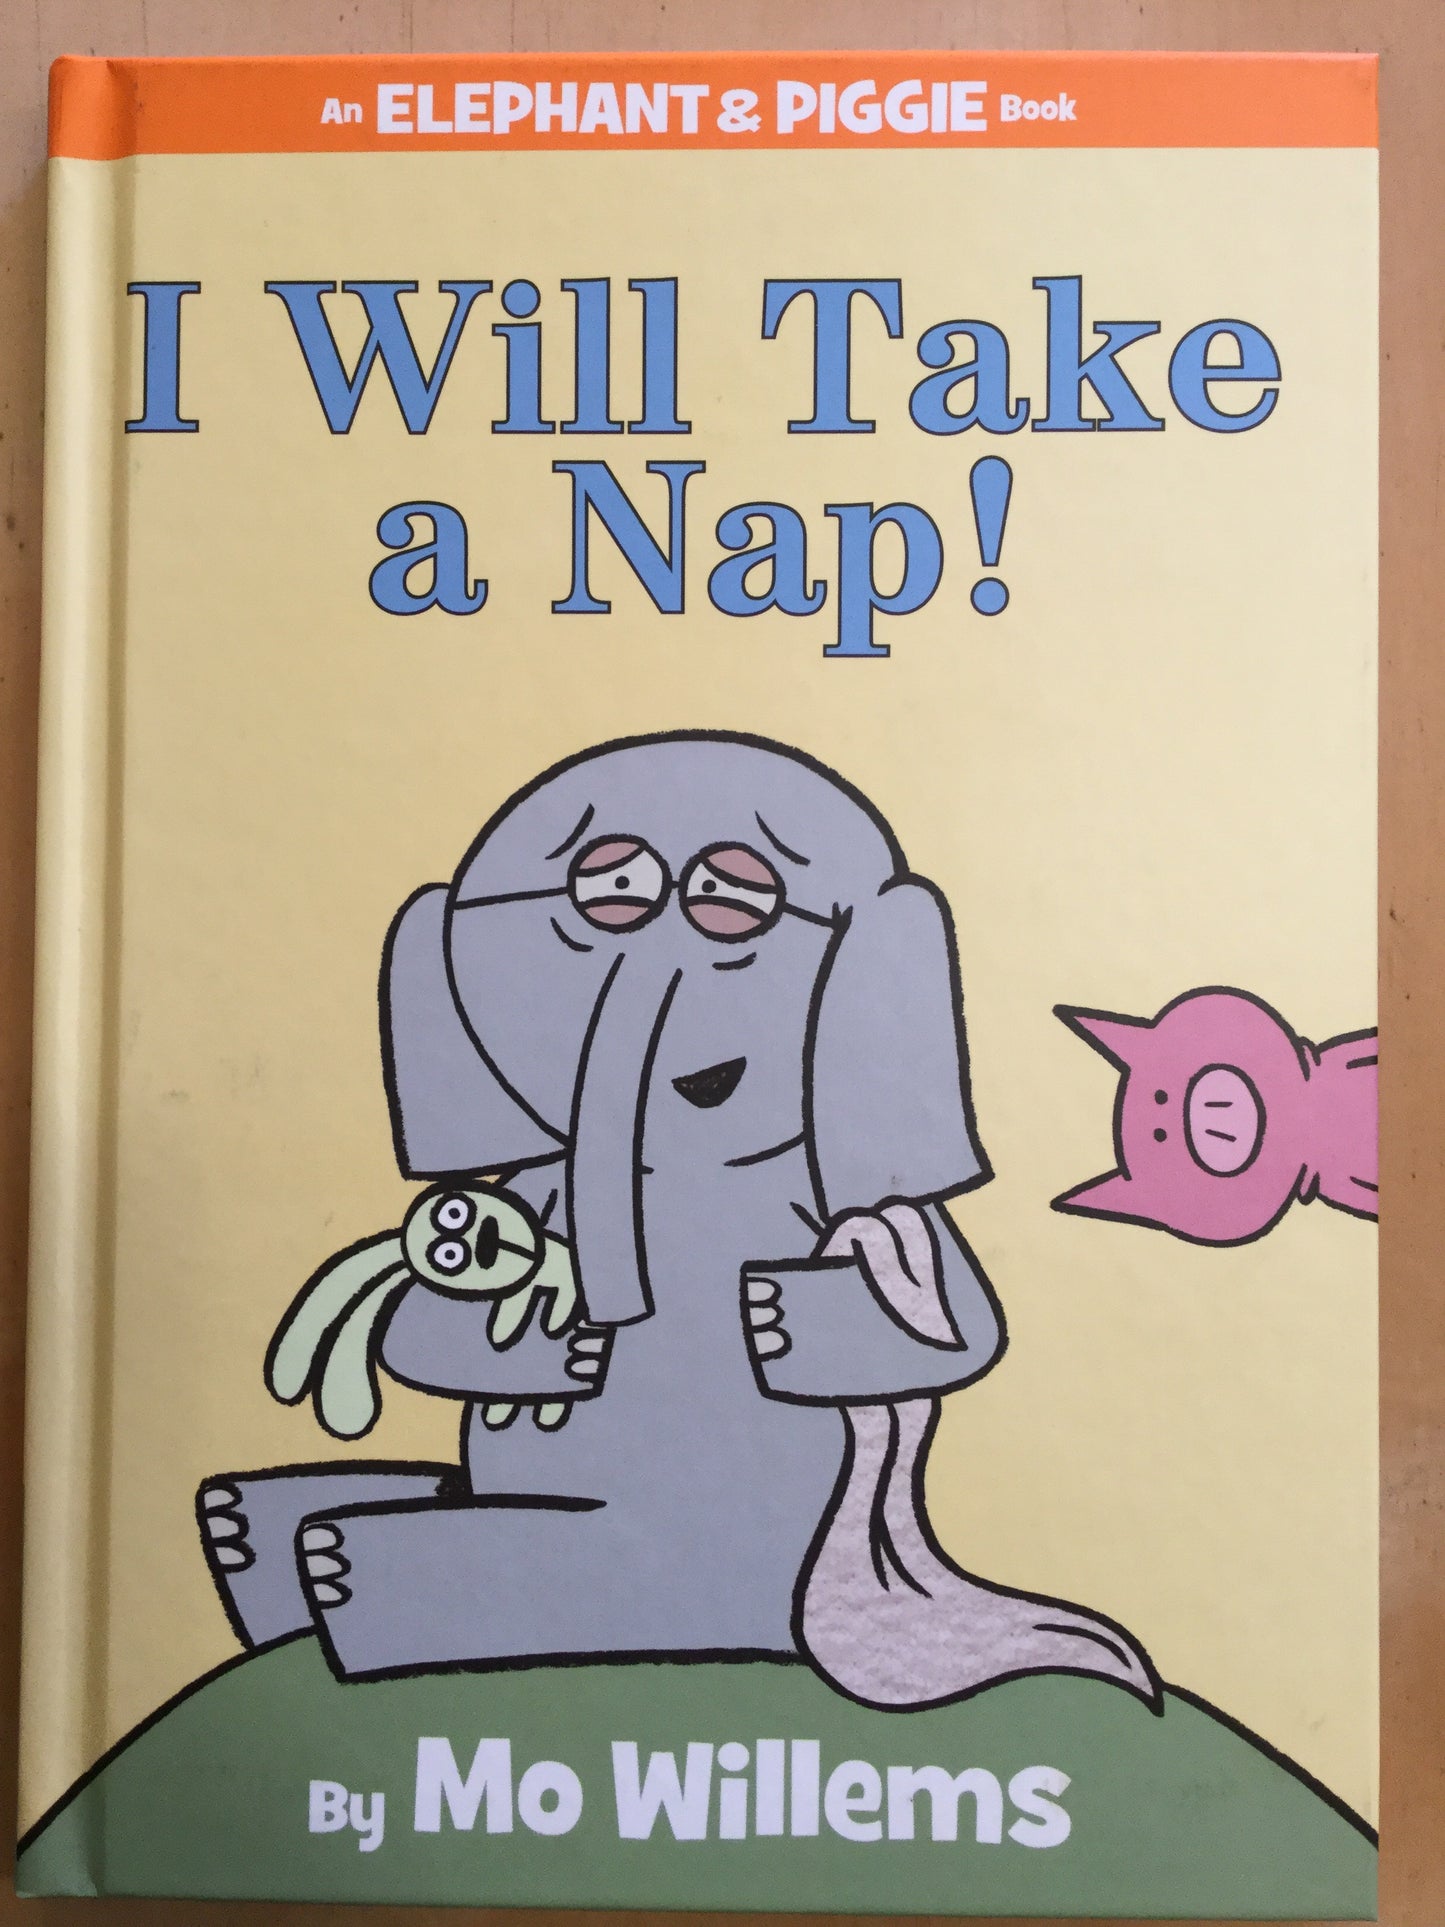 I will Take a Nap!